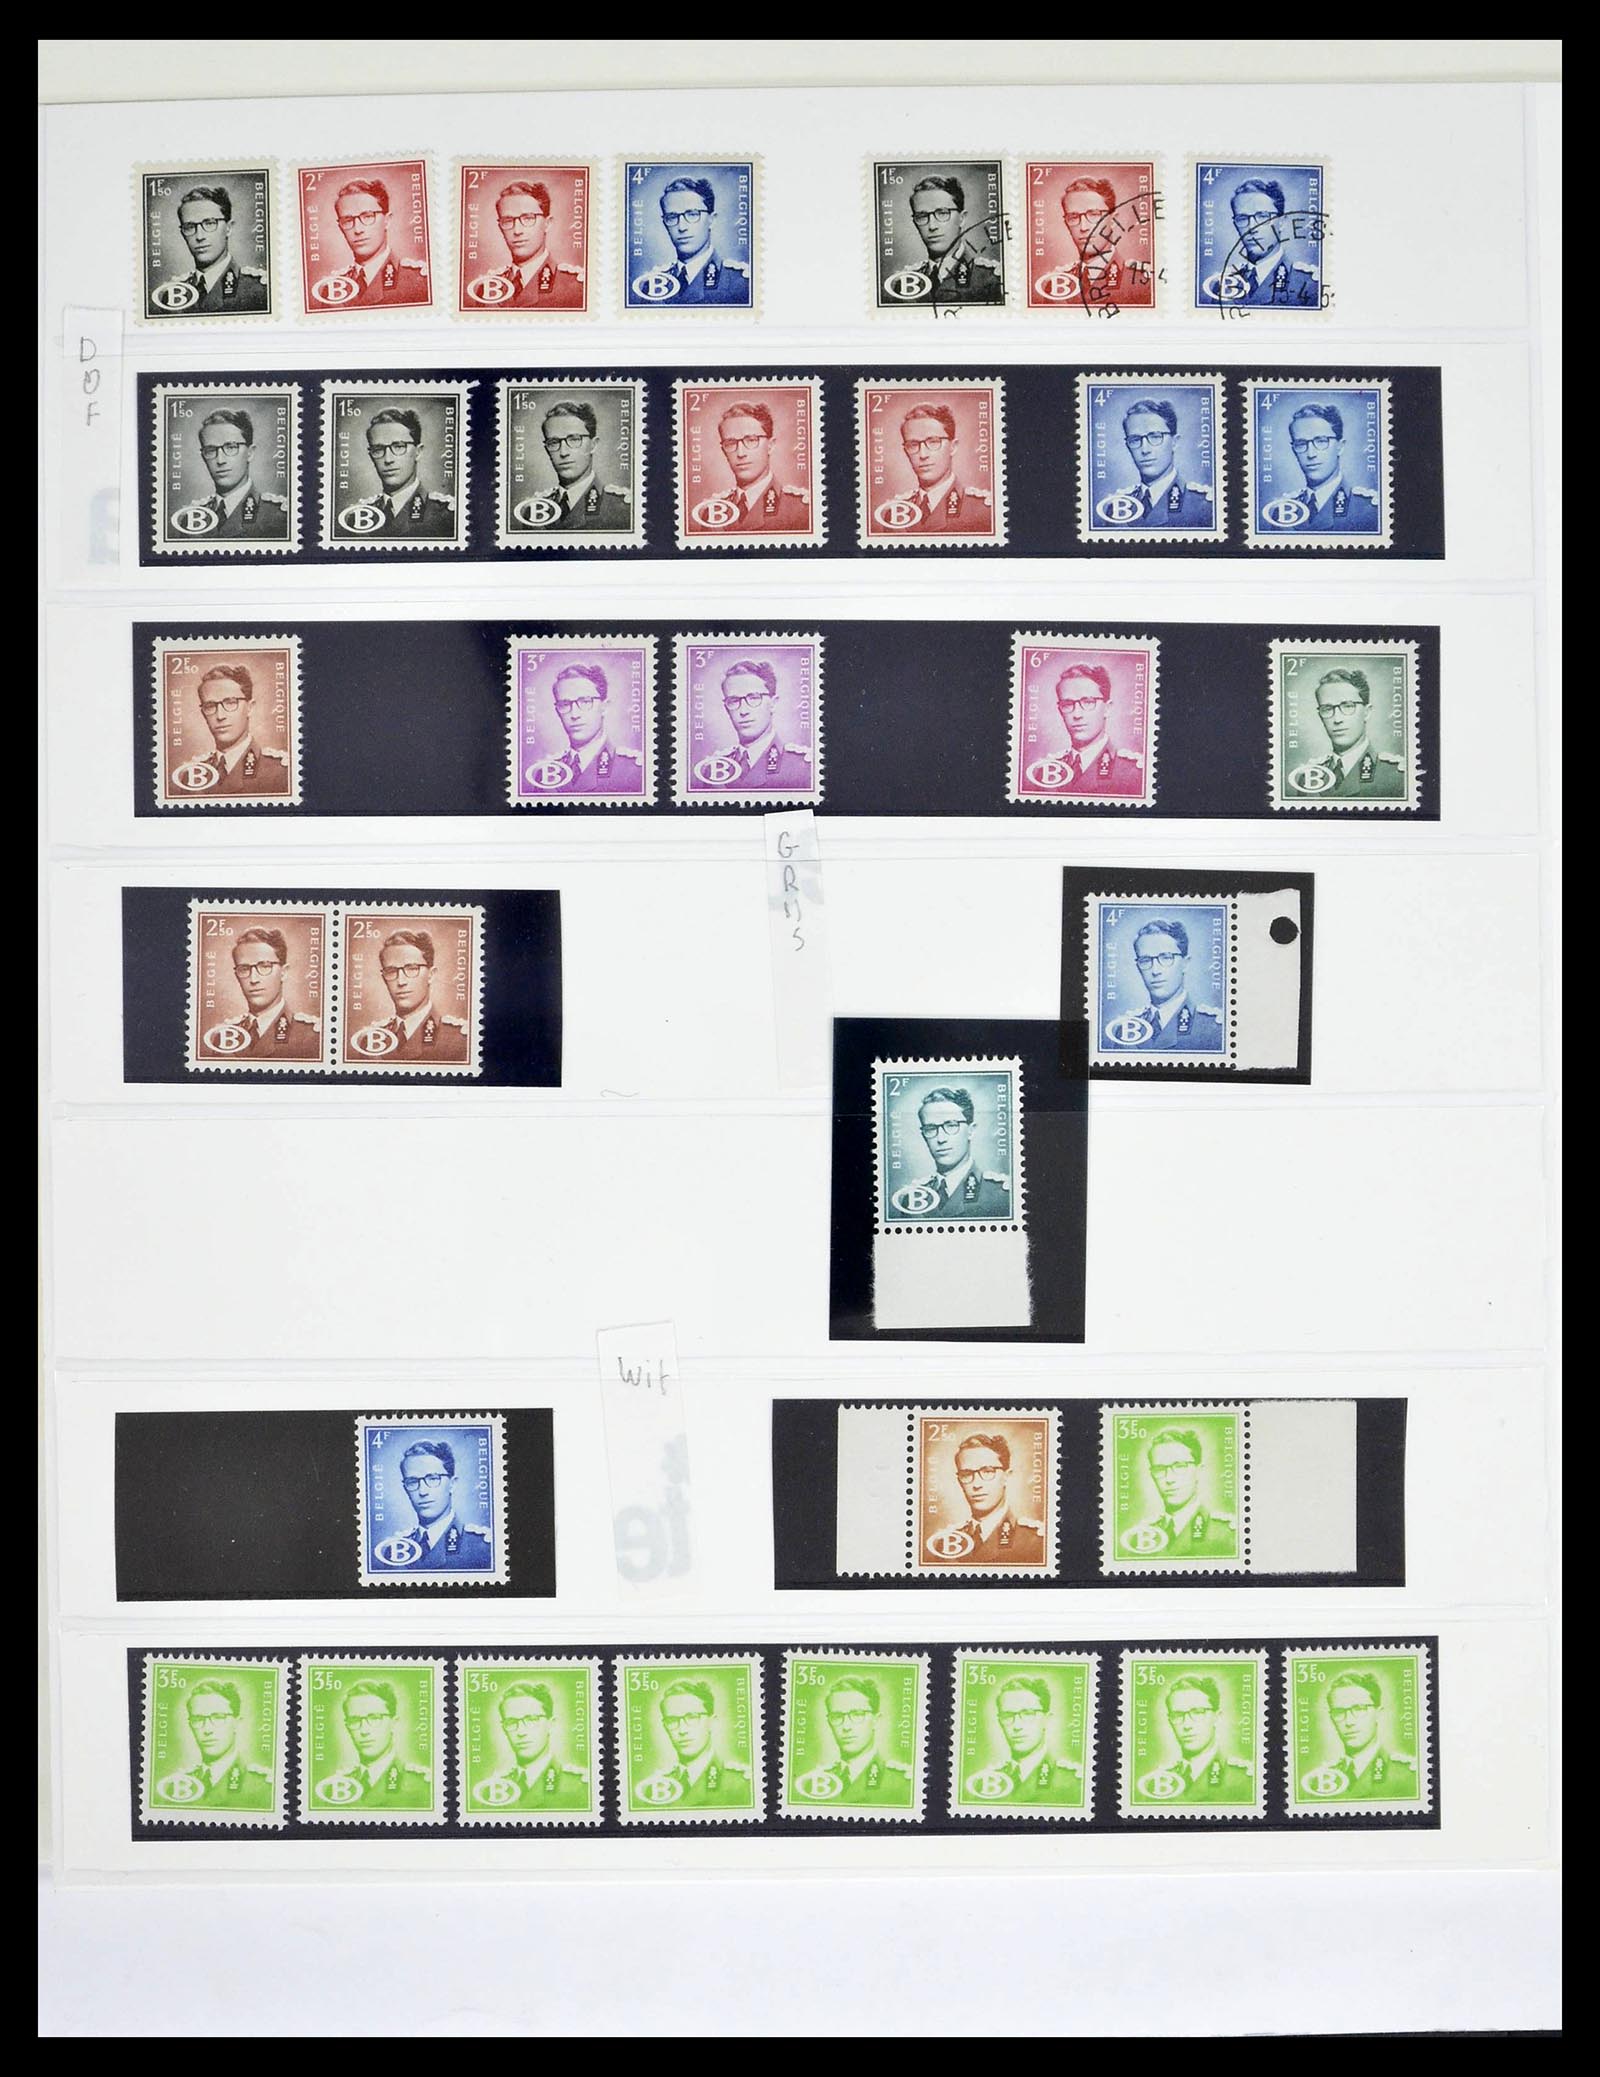 39229 0034 - Stamp collection 39229 Belgium Boudewijn with glasses 1952-1975.